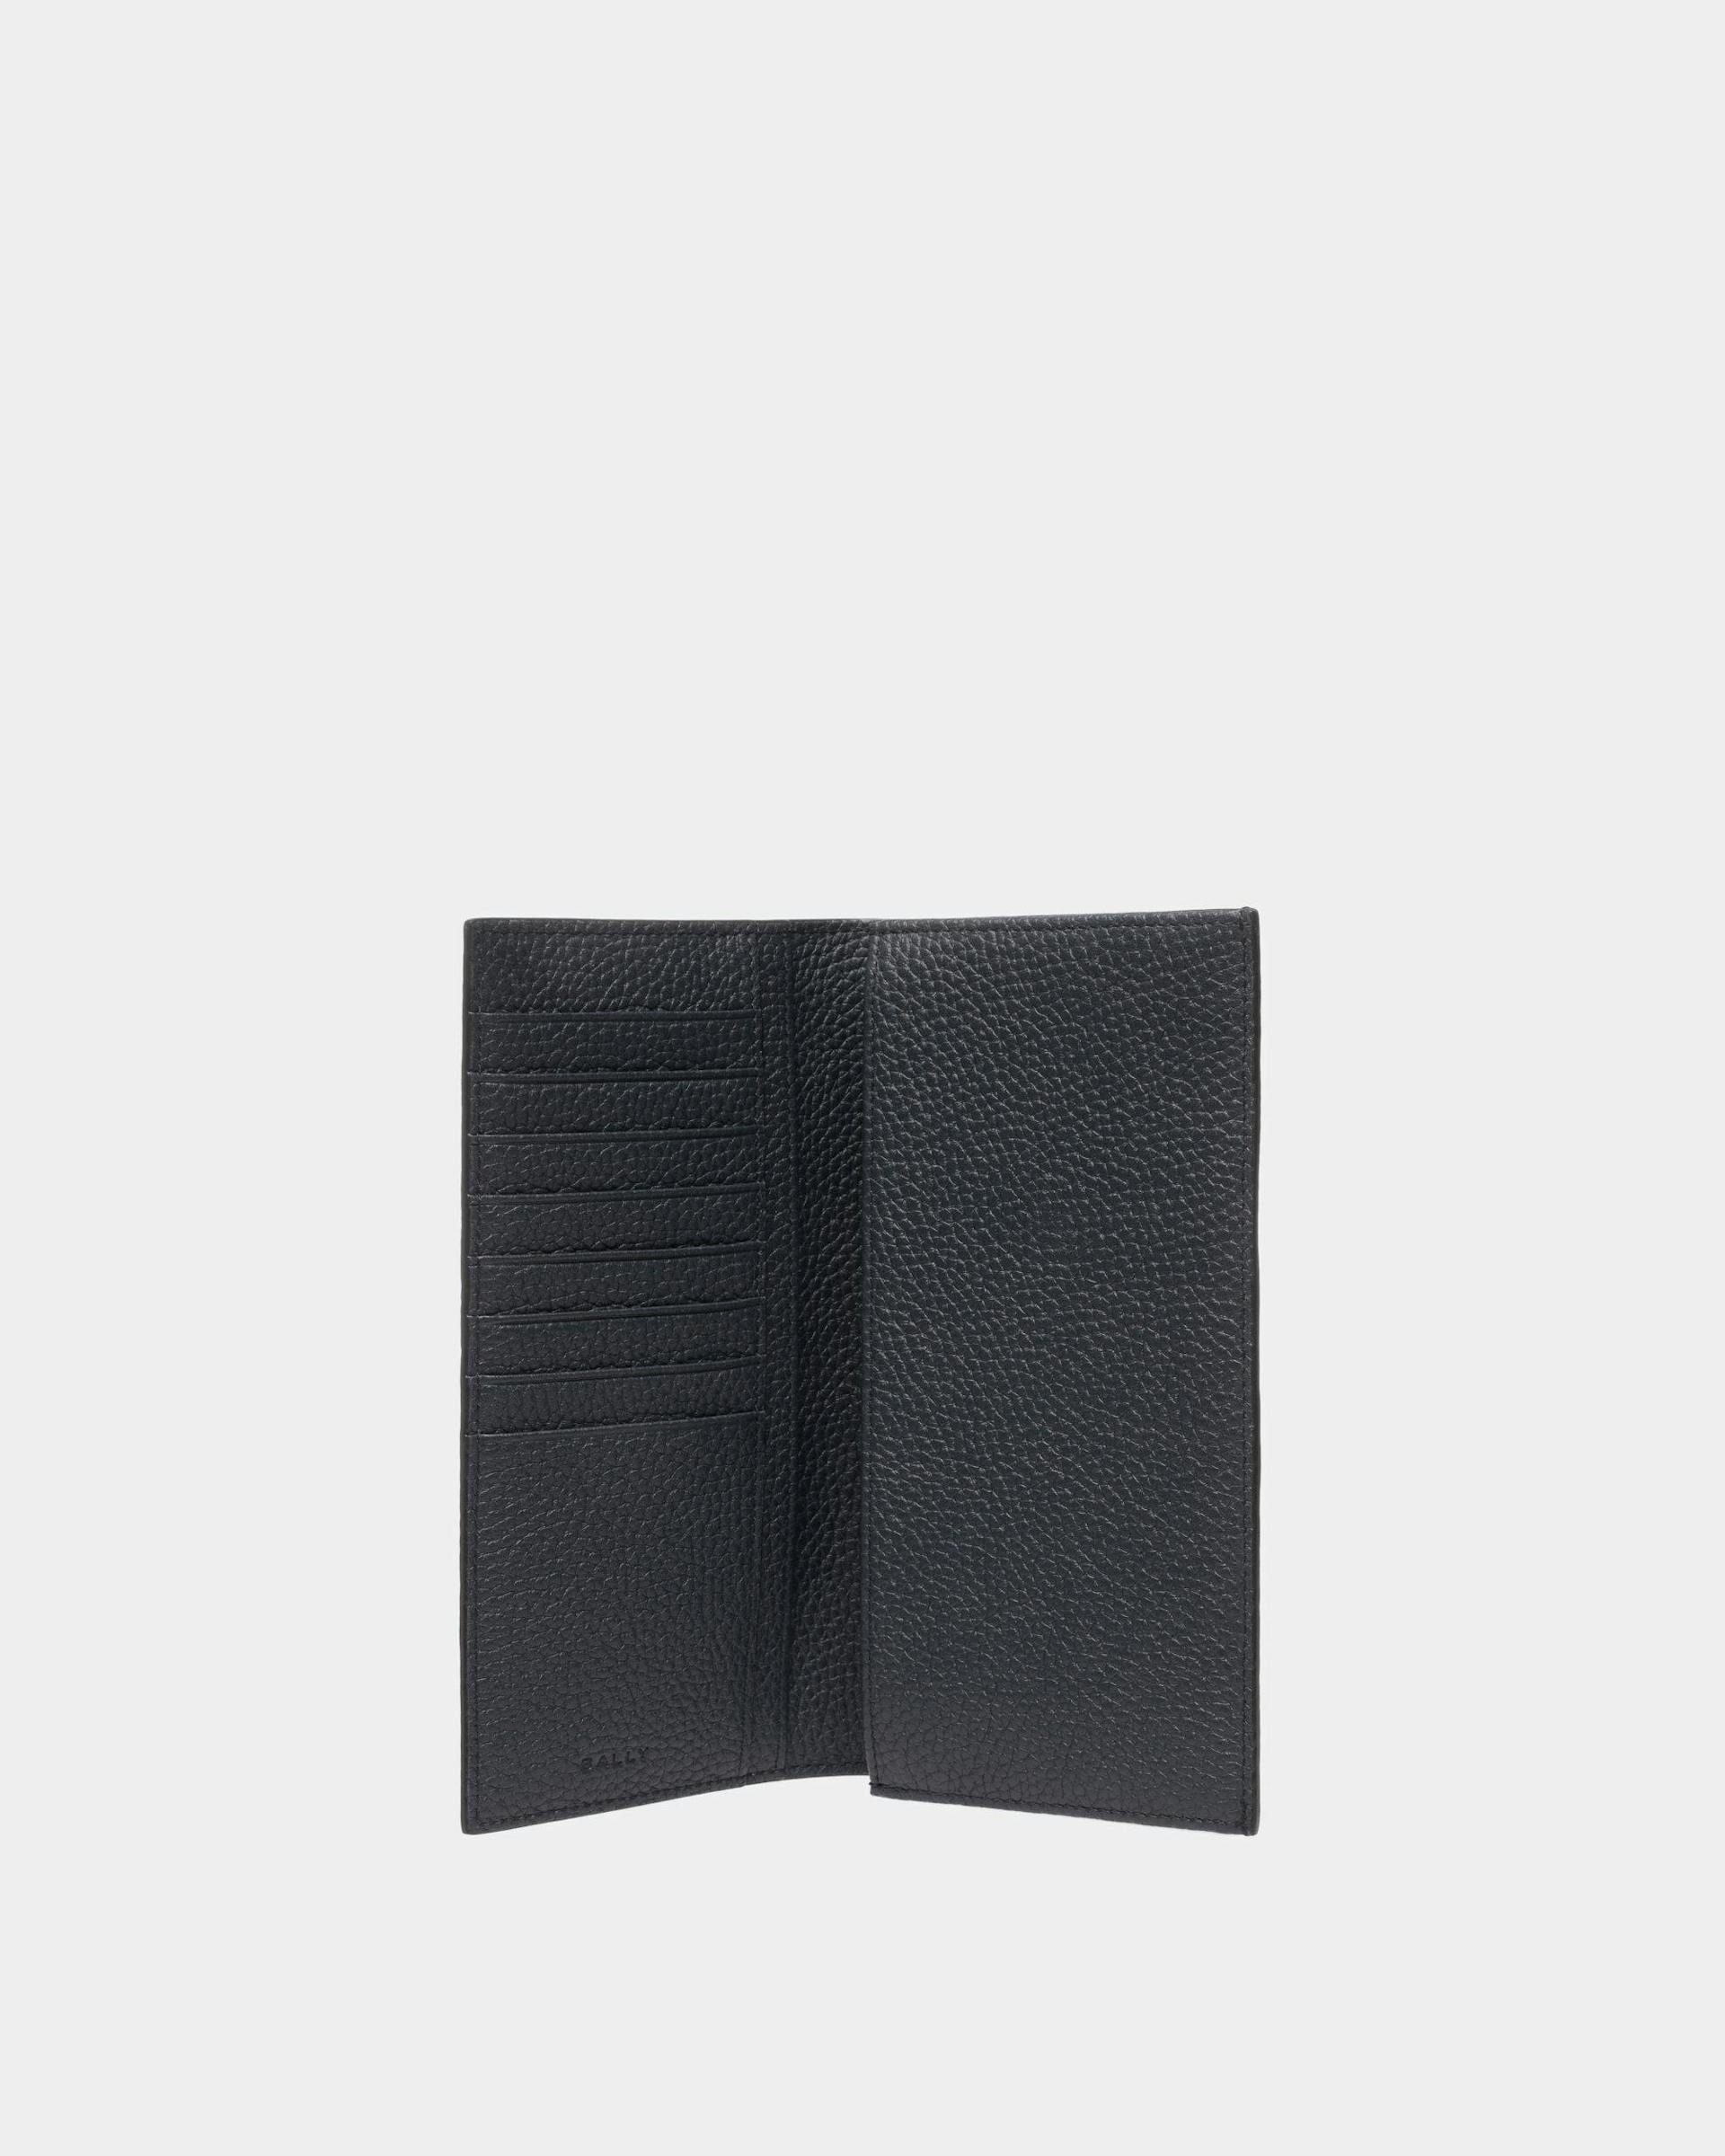 Men's Ribbon Continental Wallet In Midnight Leather | Bally | Still Life Open / Inside